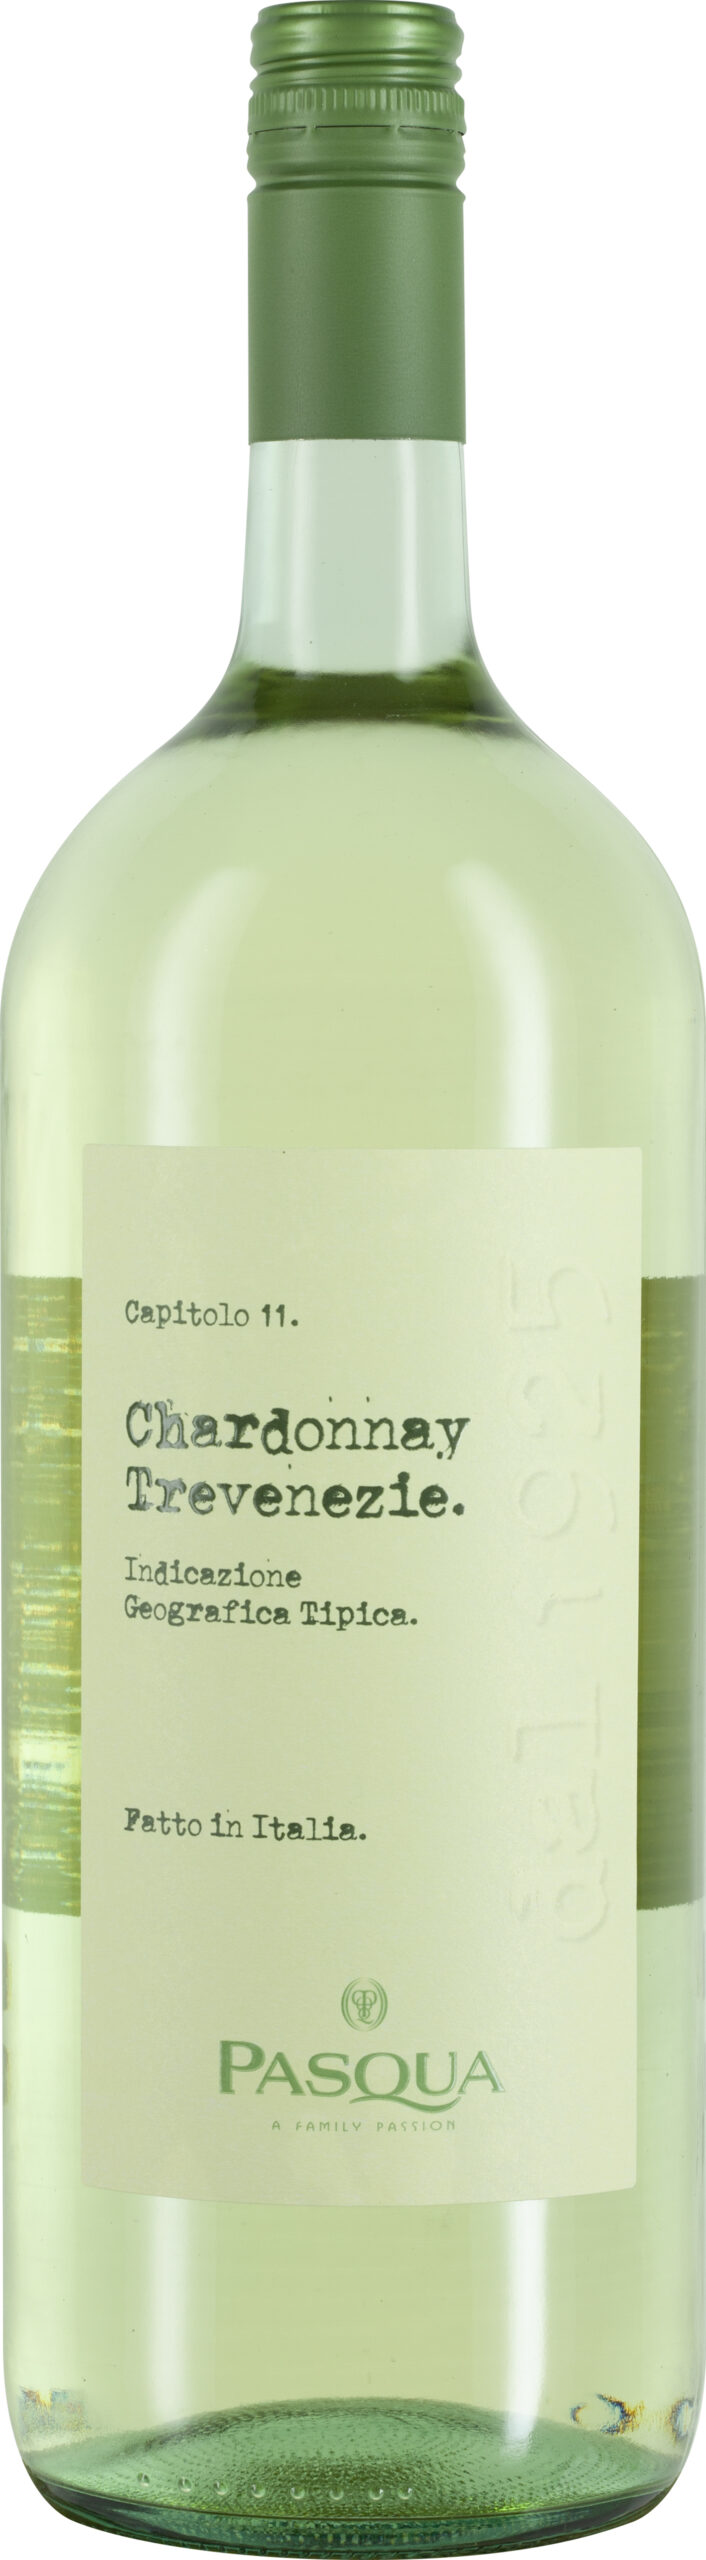 Le Weine - Trevenezie IGT Pasqua Schenk Chardonnay Collezioni,